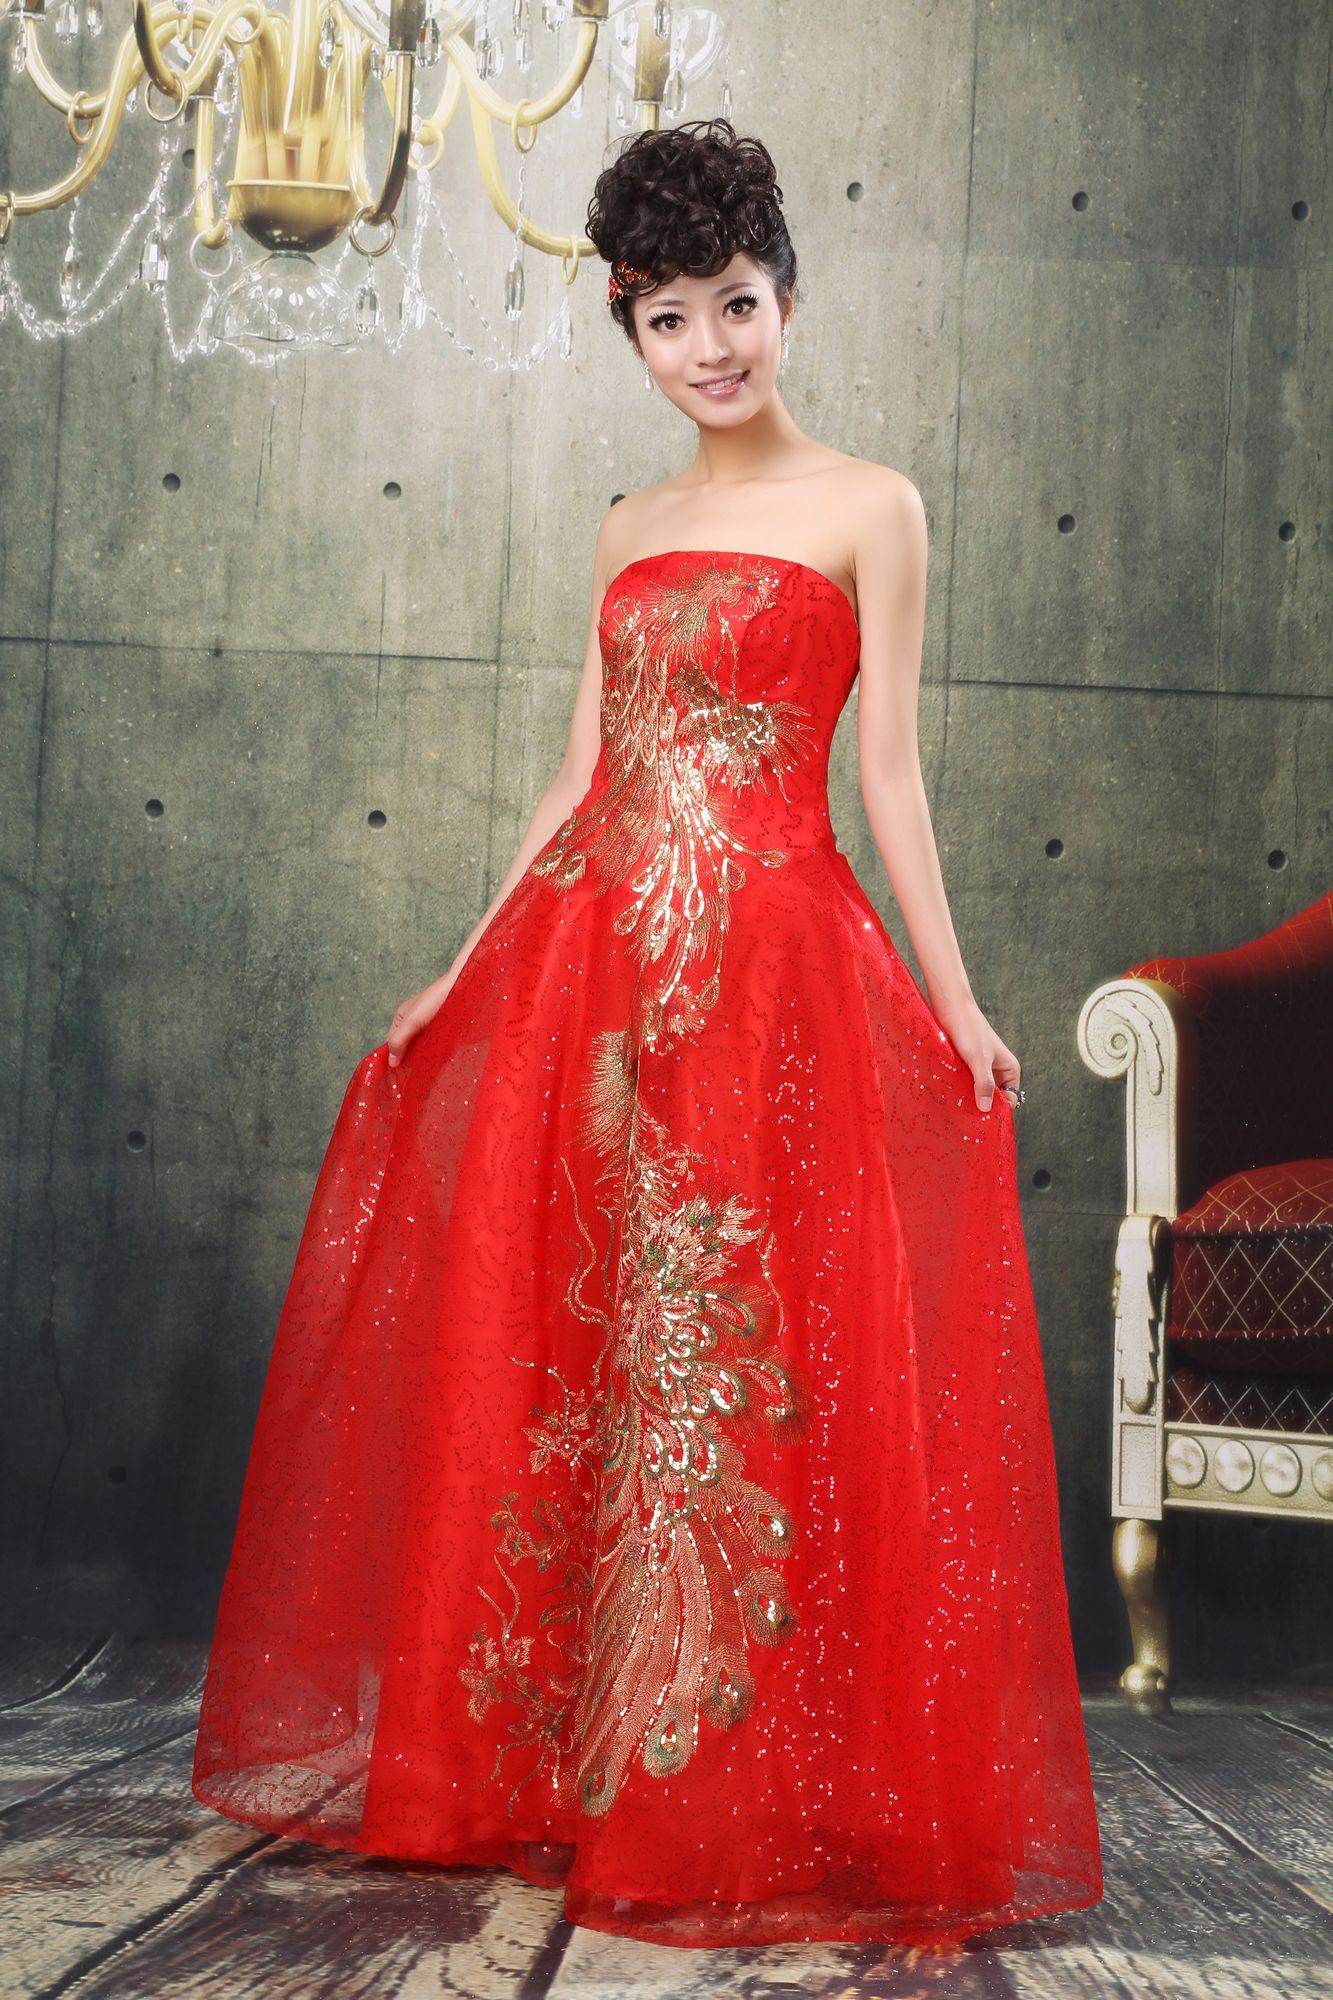 Princess bride big red paillette formal dress costume married (WD001)